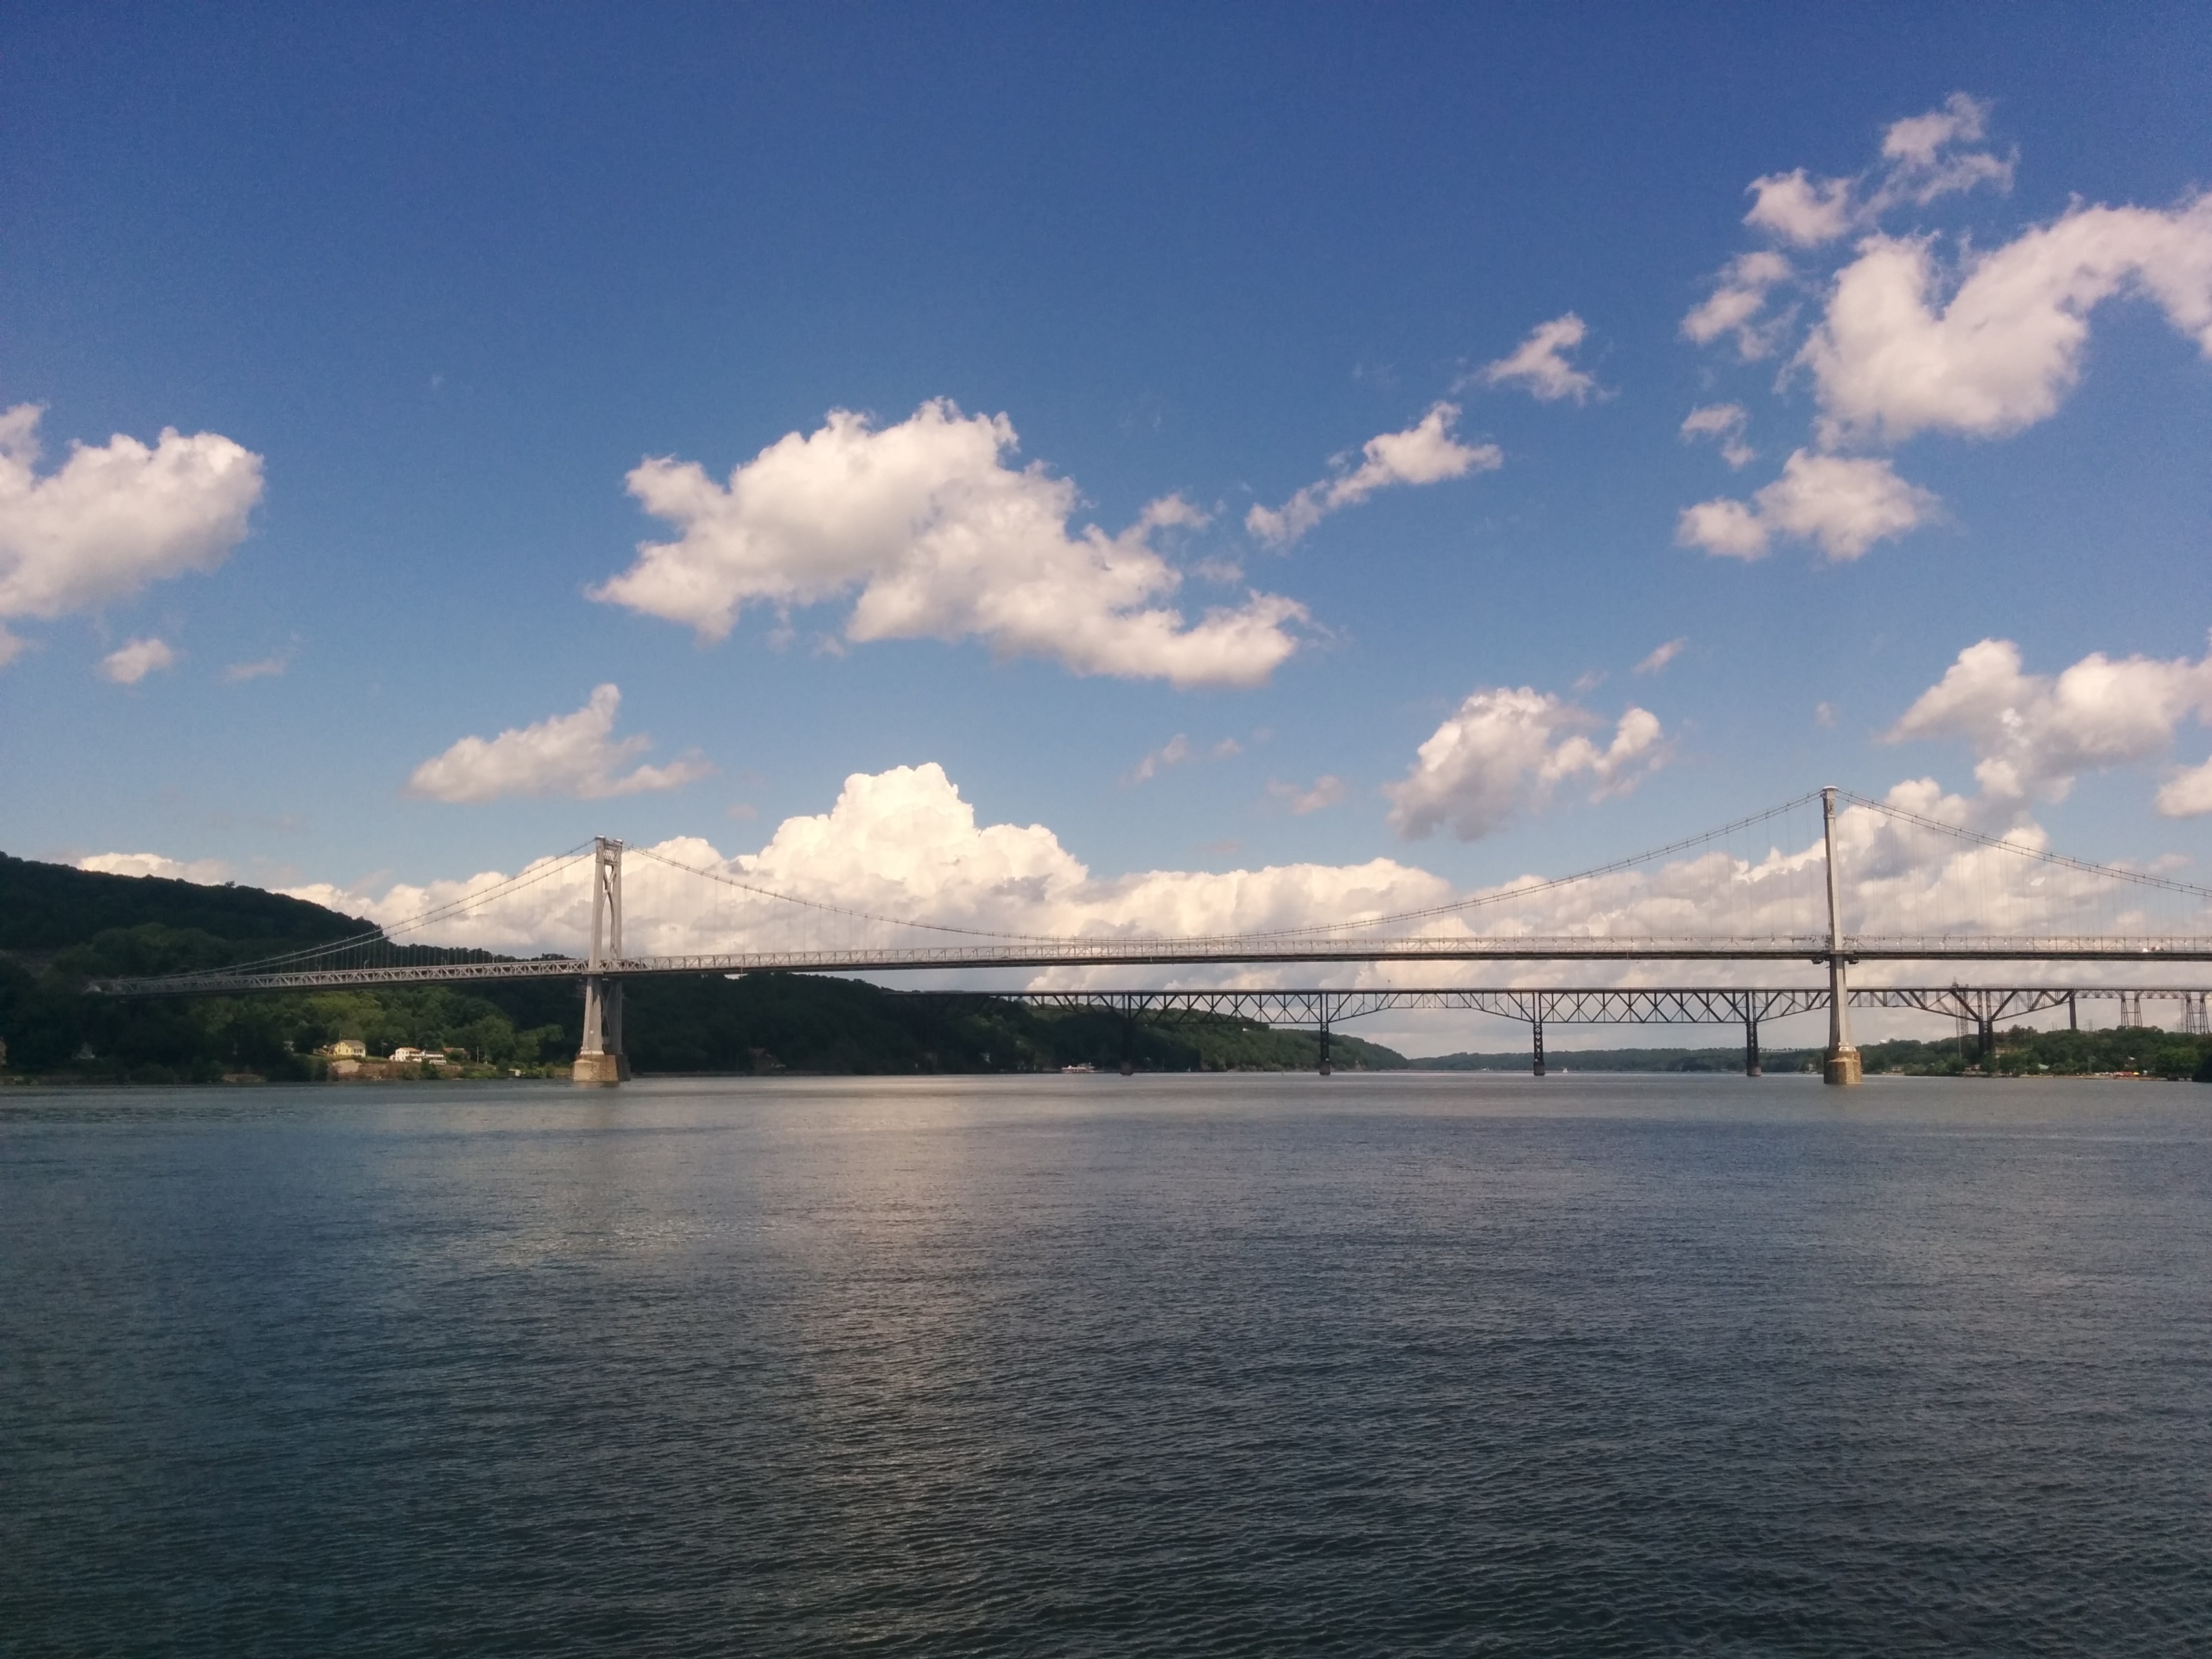 Mid-Hudson bridge